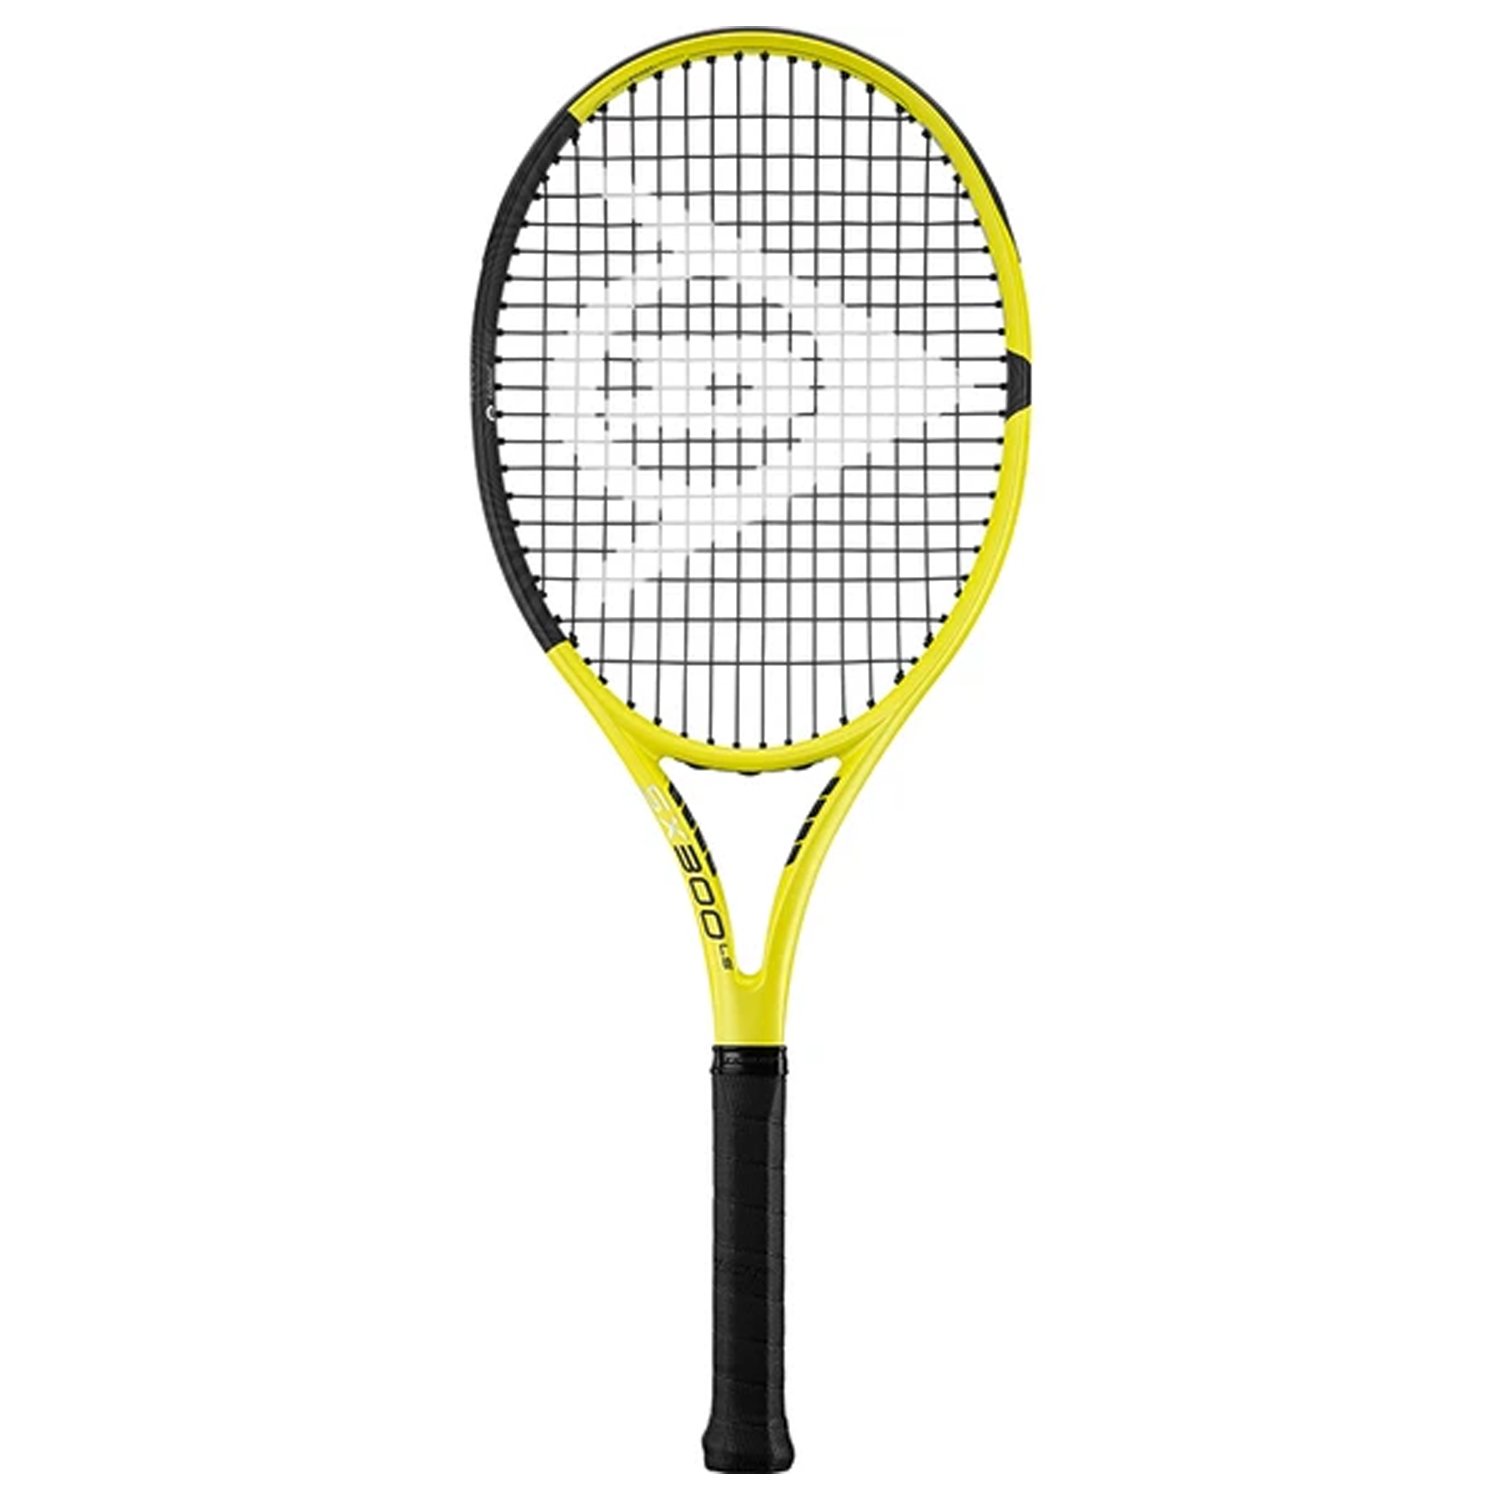 Dunlop SX300 LITE Tenis Raketi - Renkli - 1